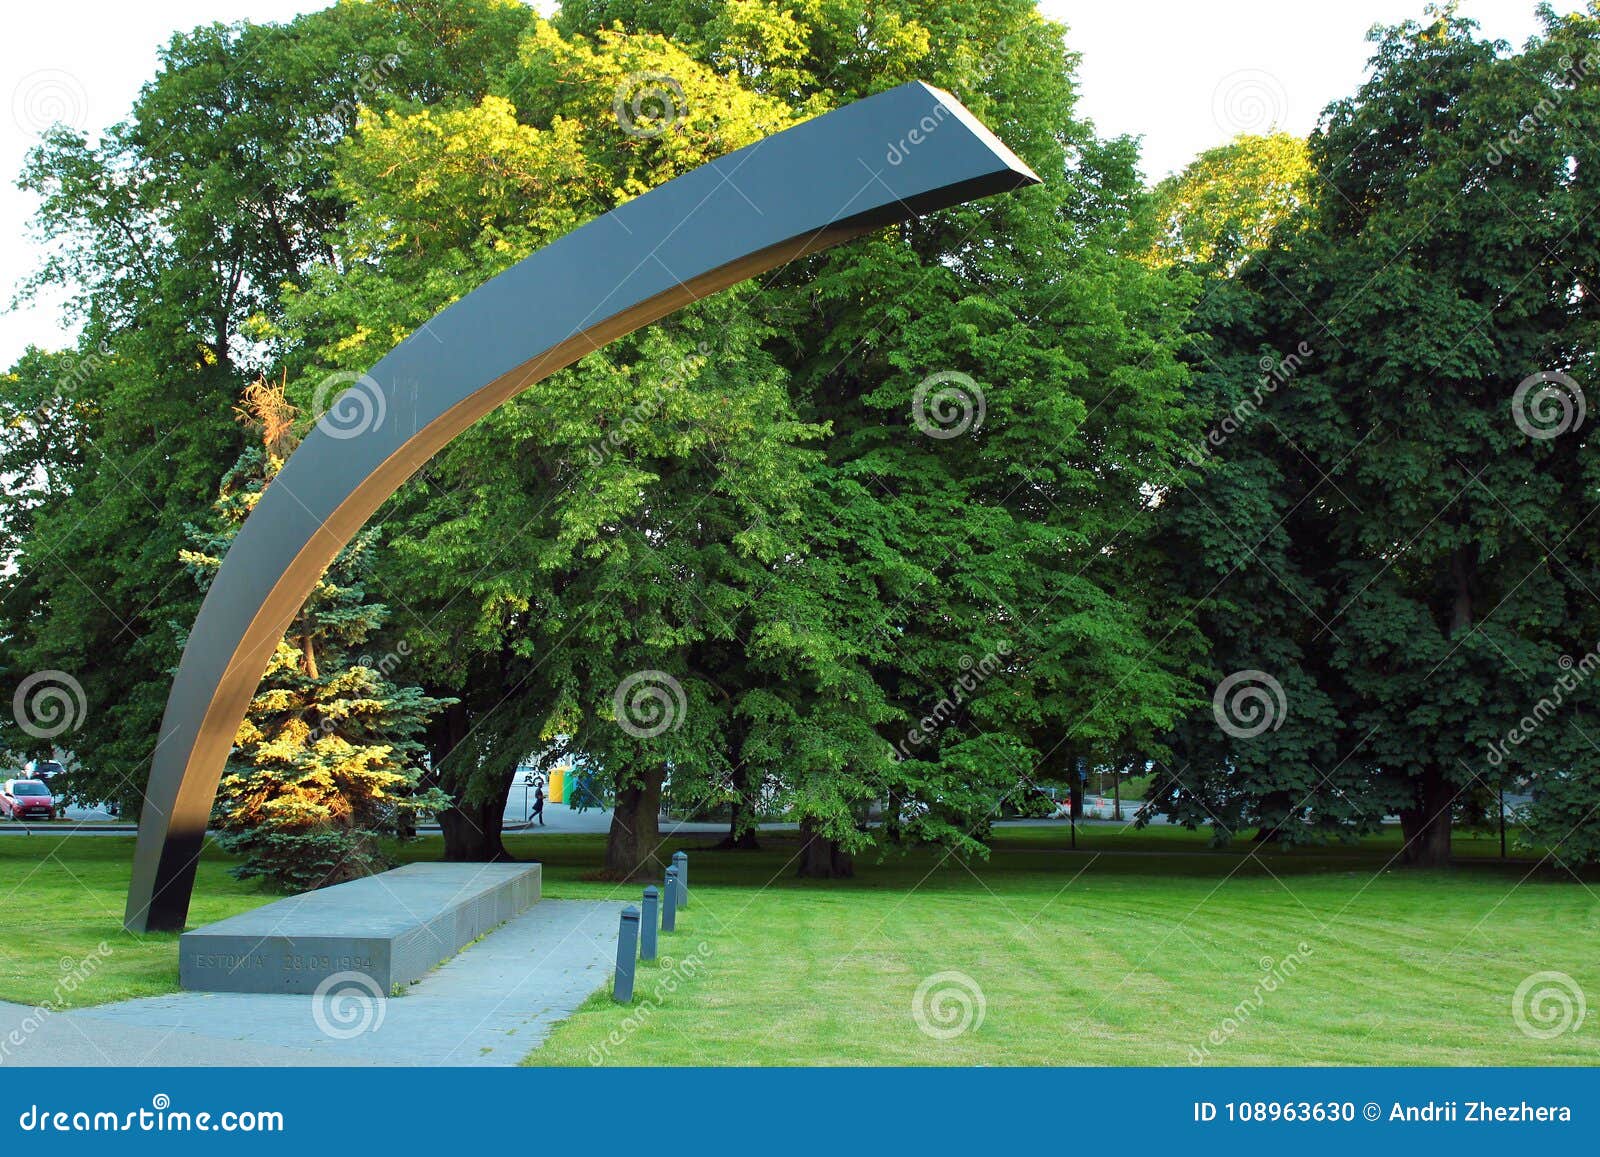 The Broken Line Memorial In Tallinn Estonia Editorial Image